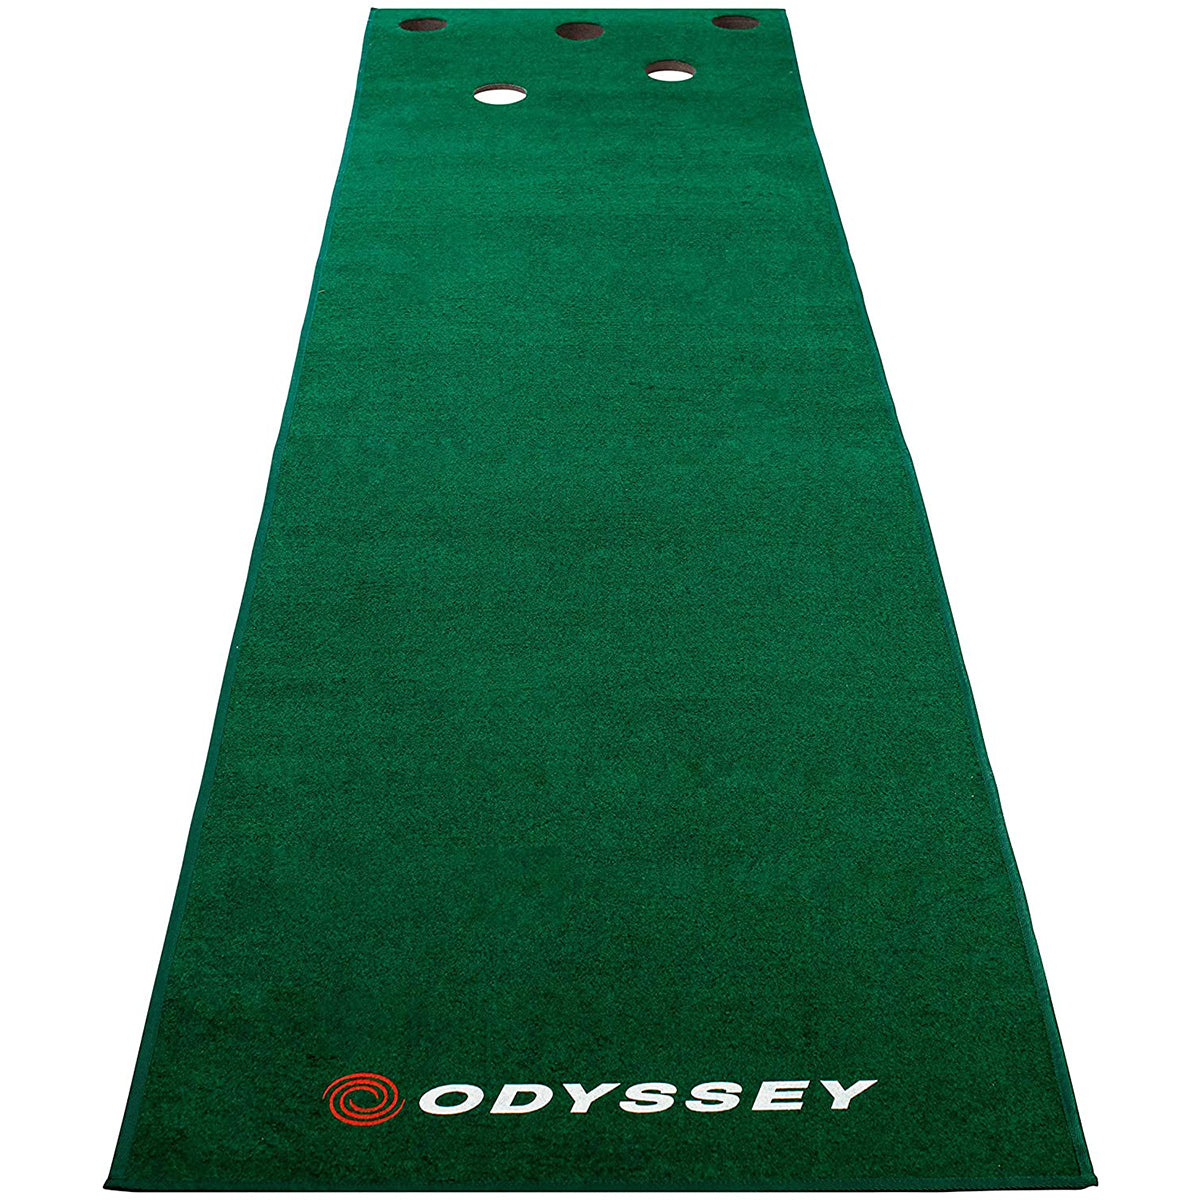 Odyssey 12' x 3' Golf Putting Mat - Green Odyssey